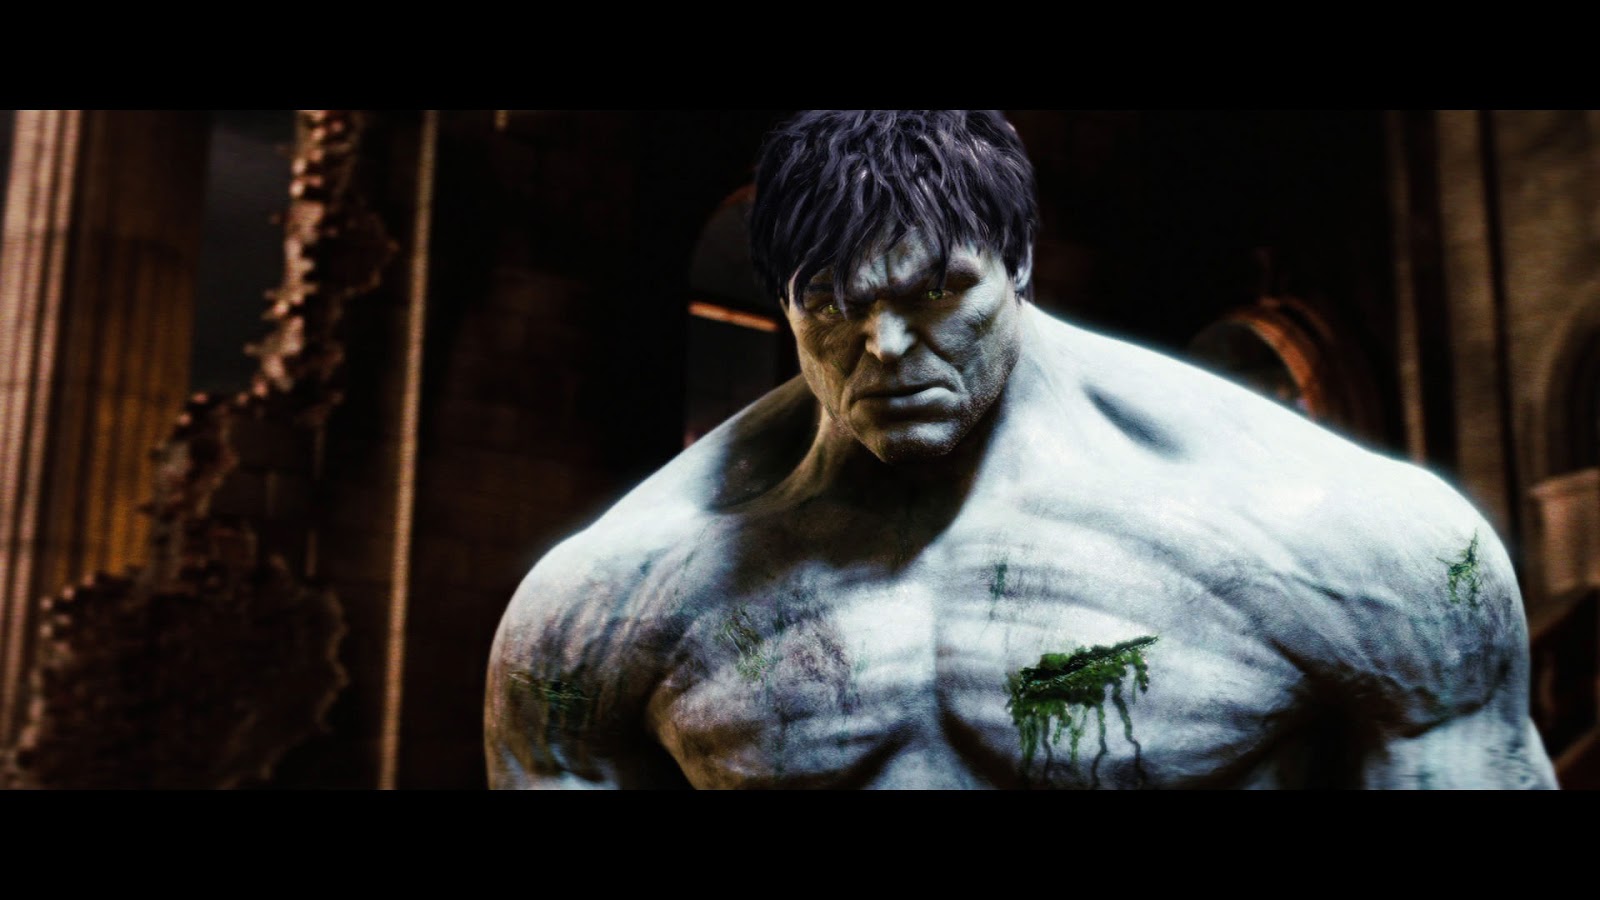 [47+] Hulk HD Wallpapers 1080p on WallpaperSafari